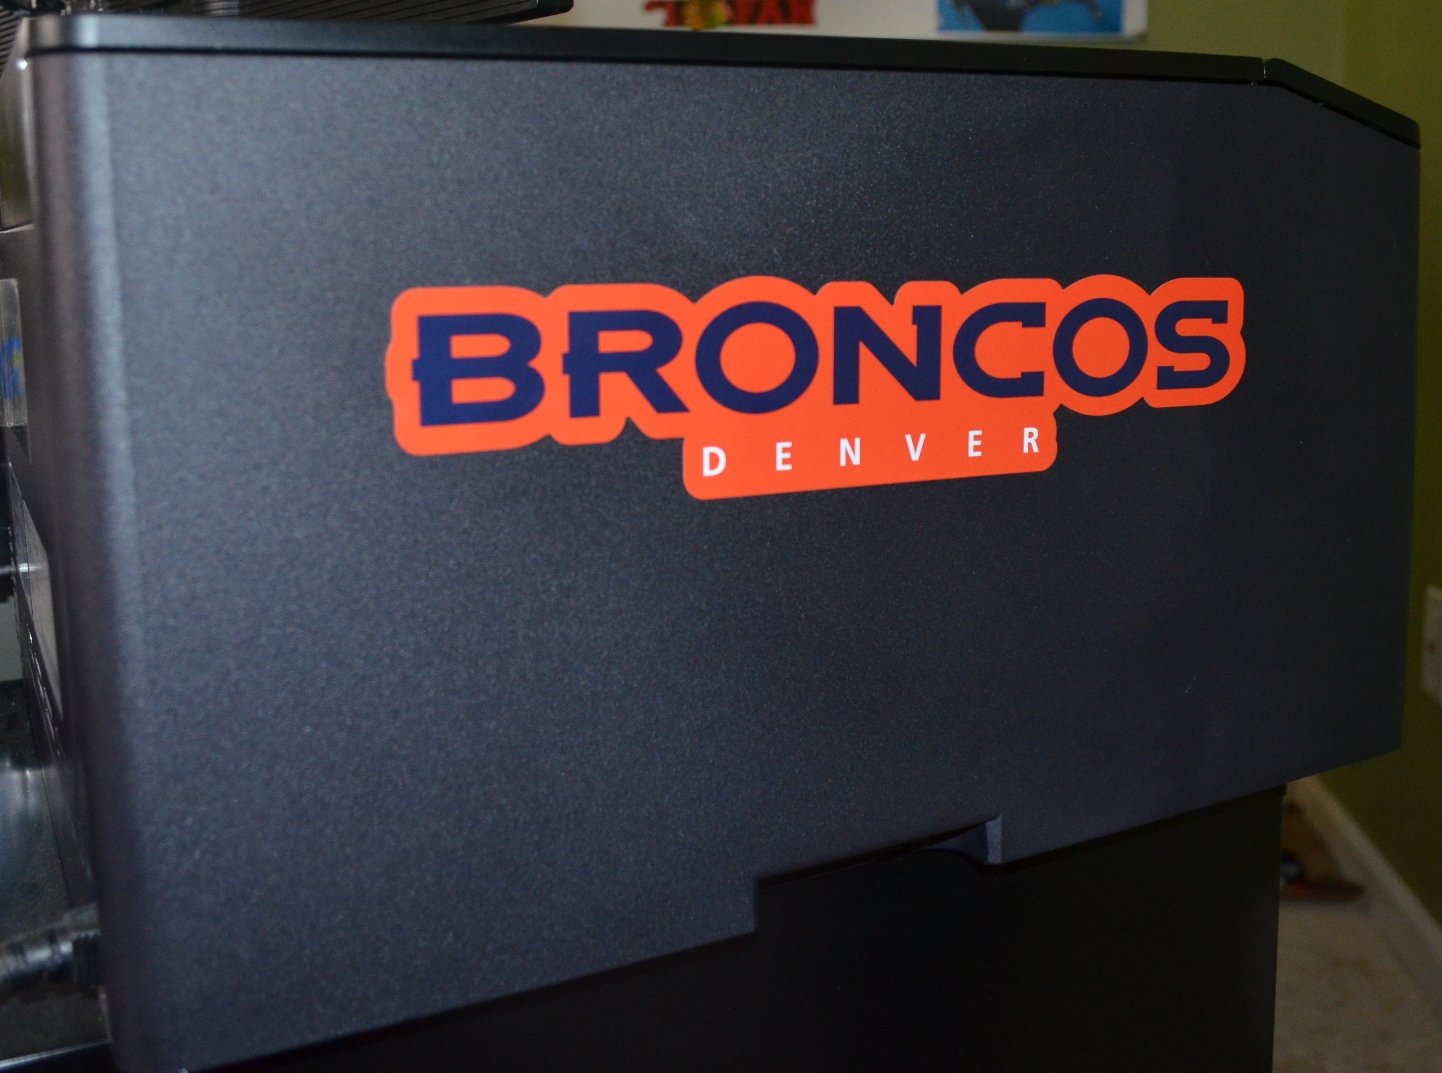 Official National Football League Fan Shop Licensed NFL Shop Multi-use Decals (Denver Broncos)